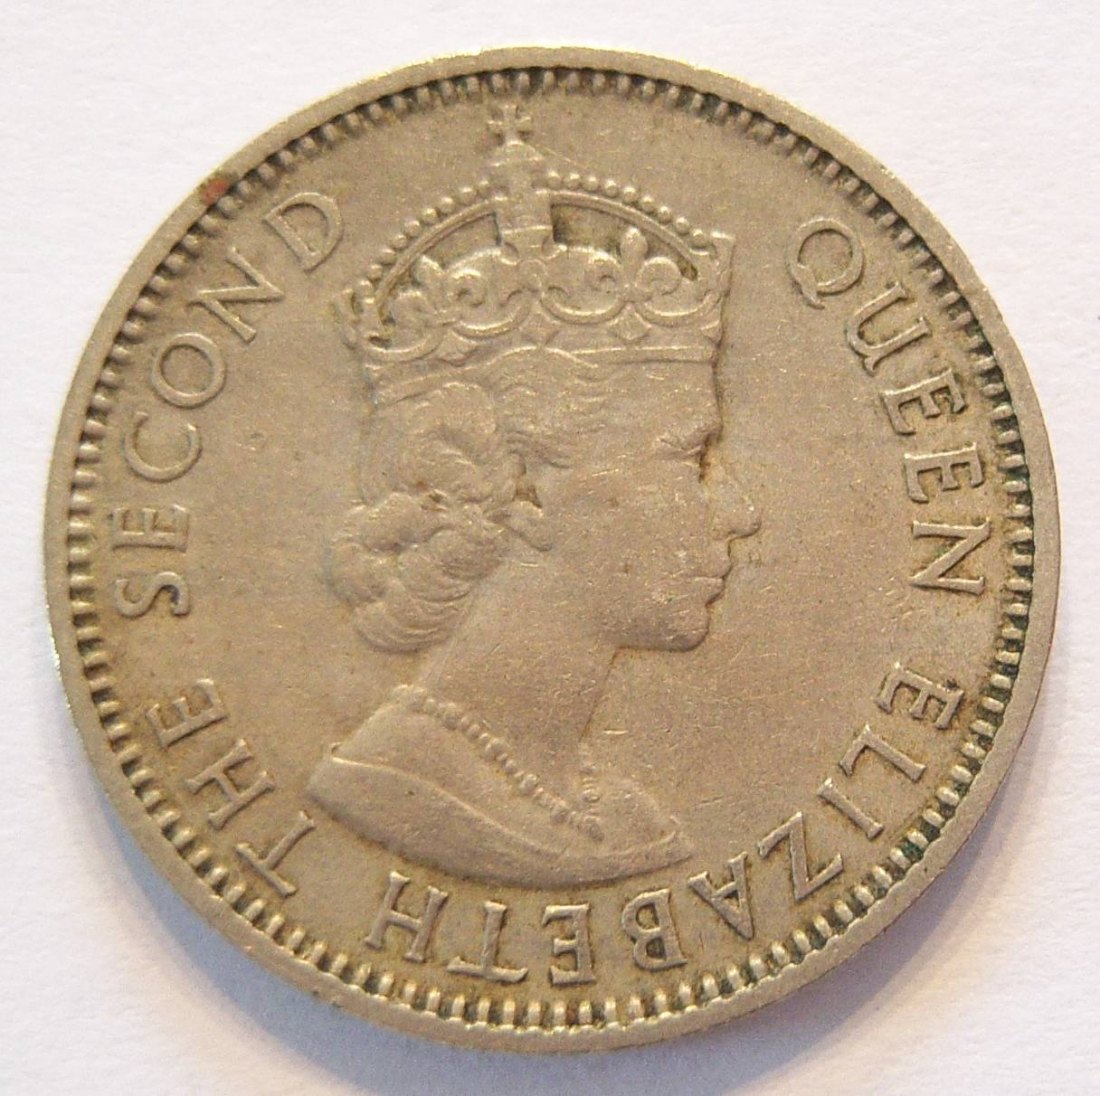  Nigeria 1 One Shilling 1959   